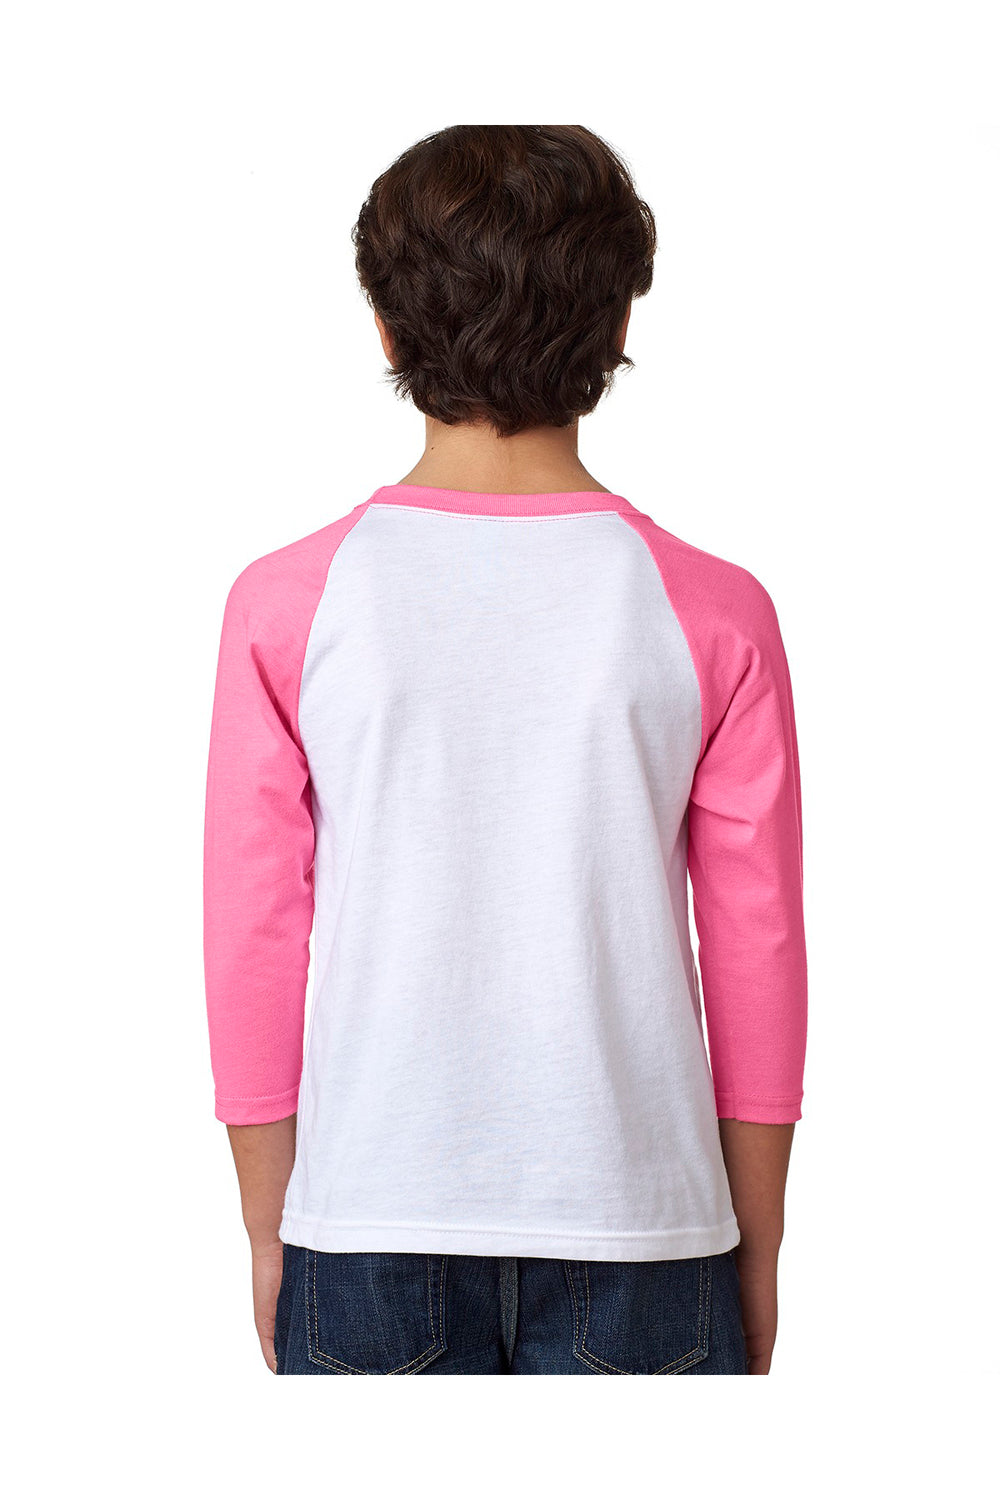 Next Level 3352 Youth CVC Jersey 3/4 Sleeve Crewneck T-Shirt White/Hot Pink Back